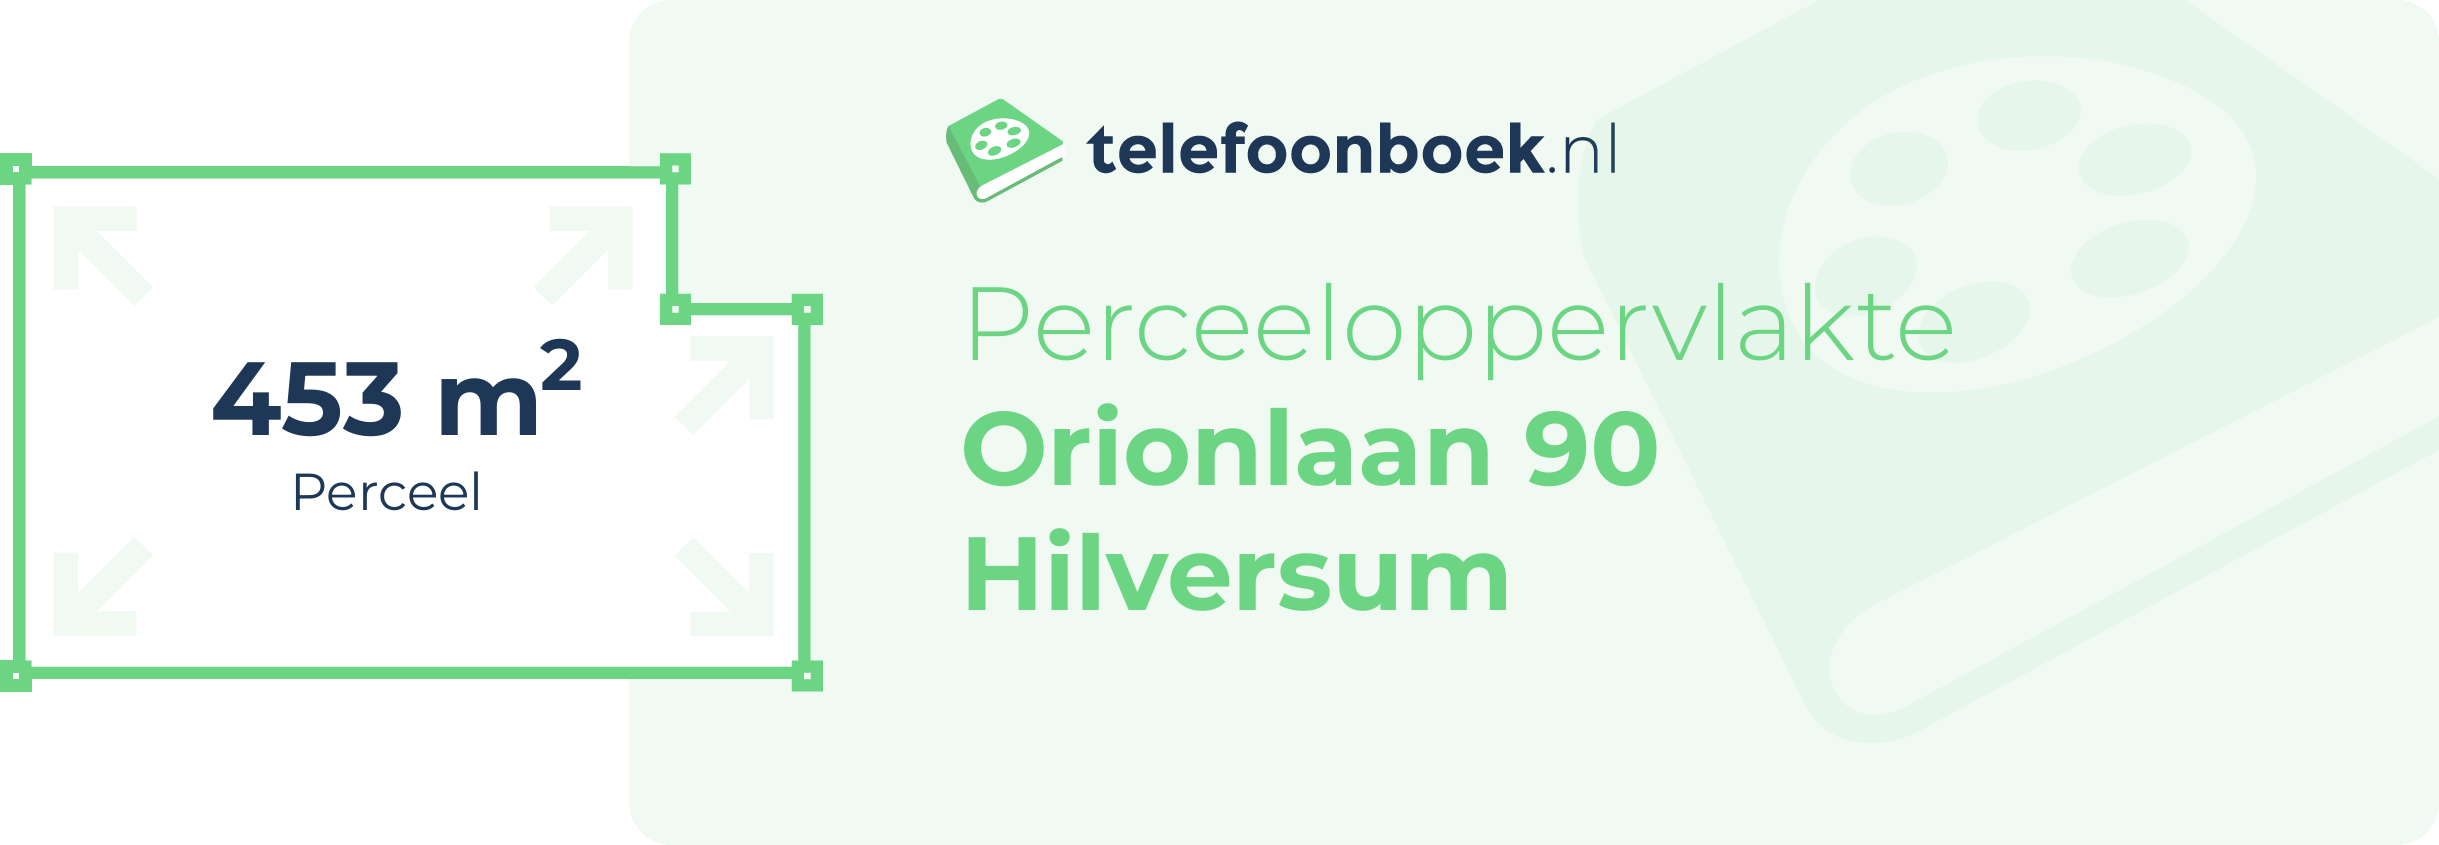 Perceeloppervlakte Orionlaan 90 Hilversum